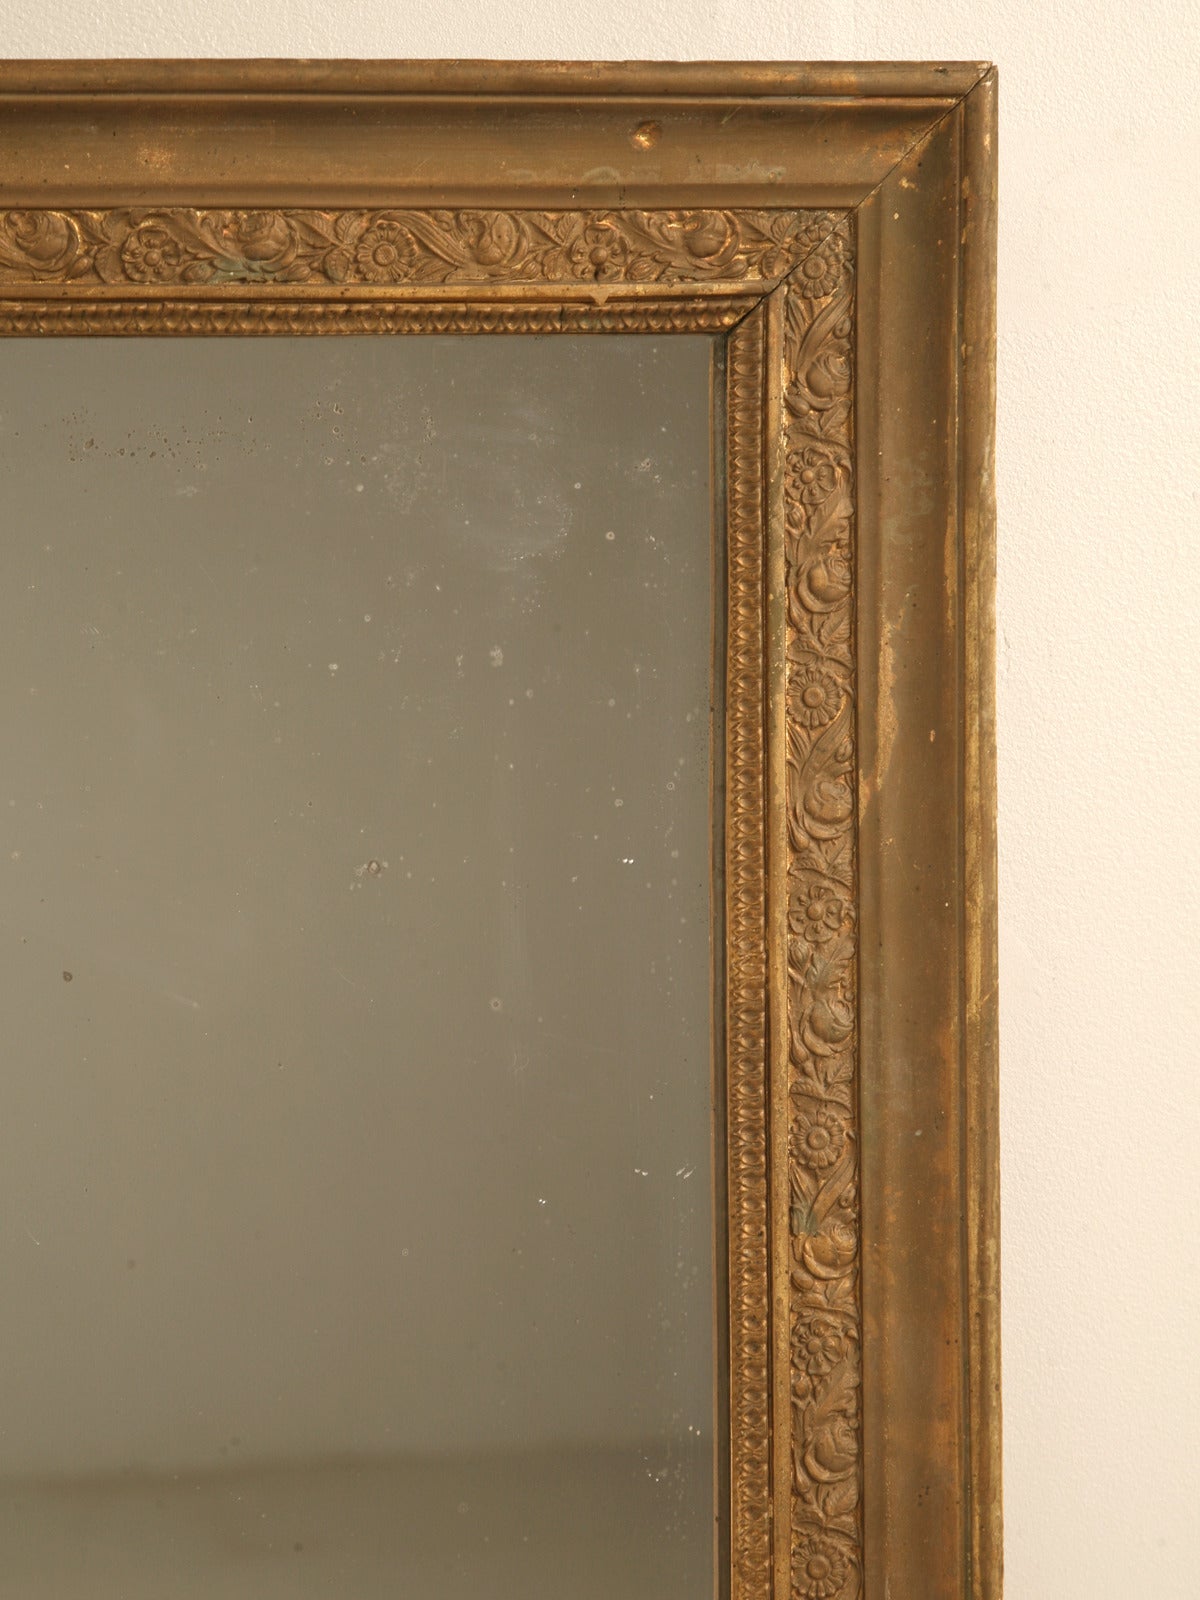 Gilt French Mirror with Original Glass, circa 1800s